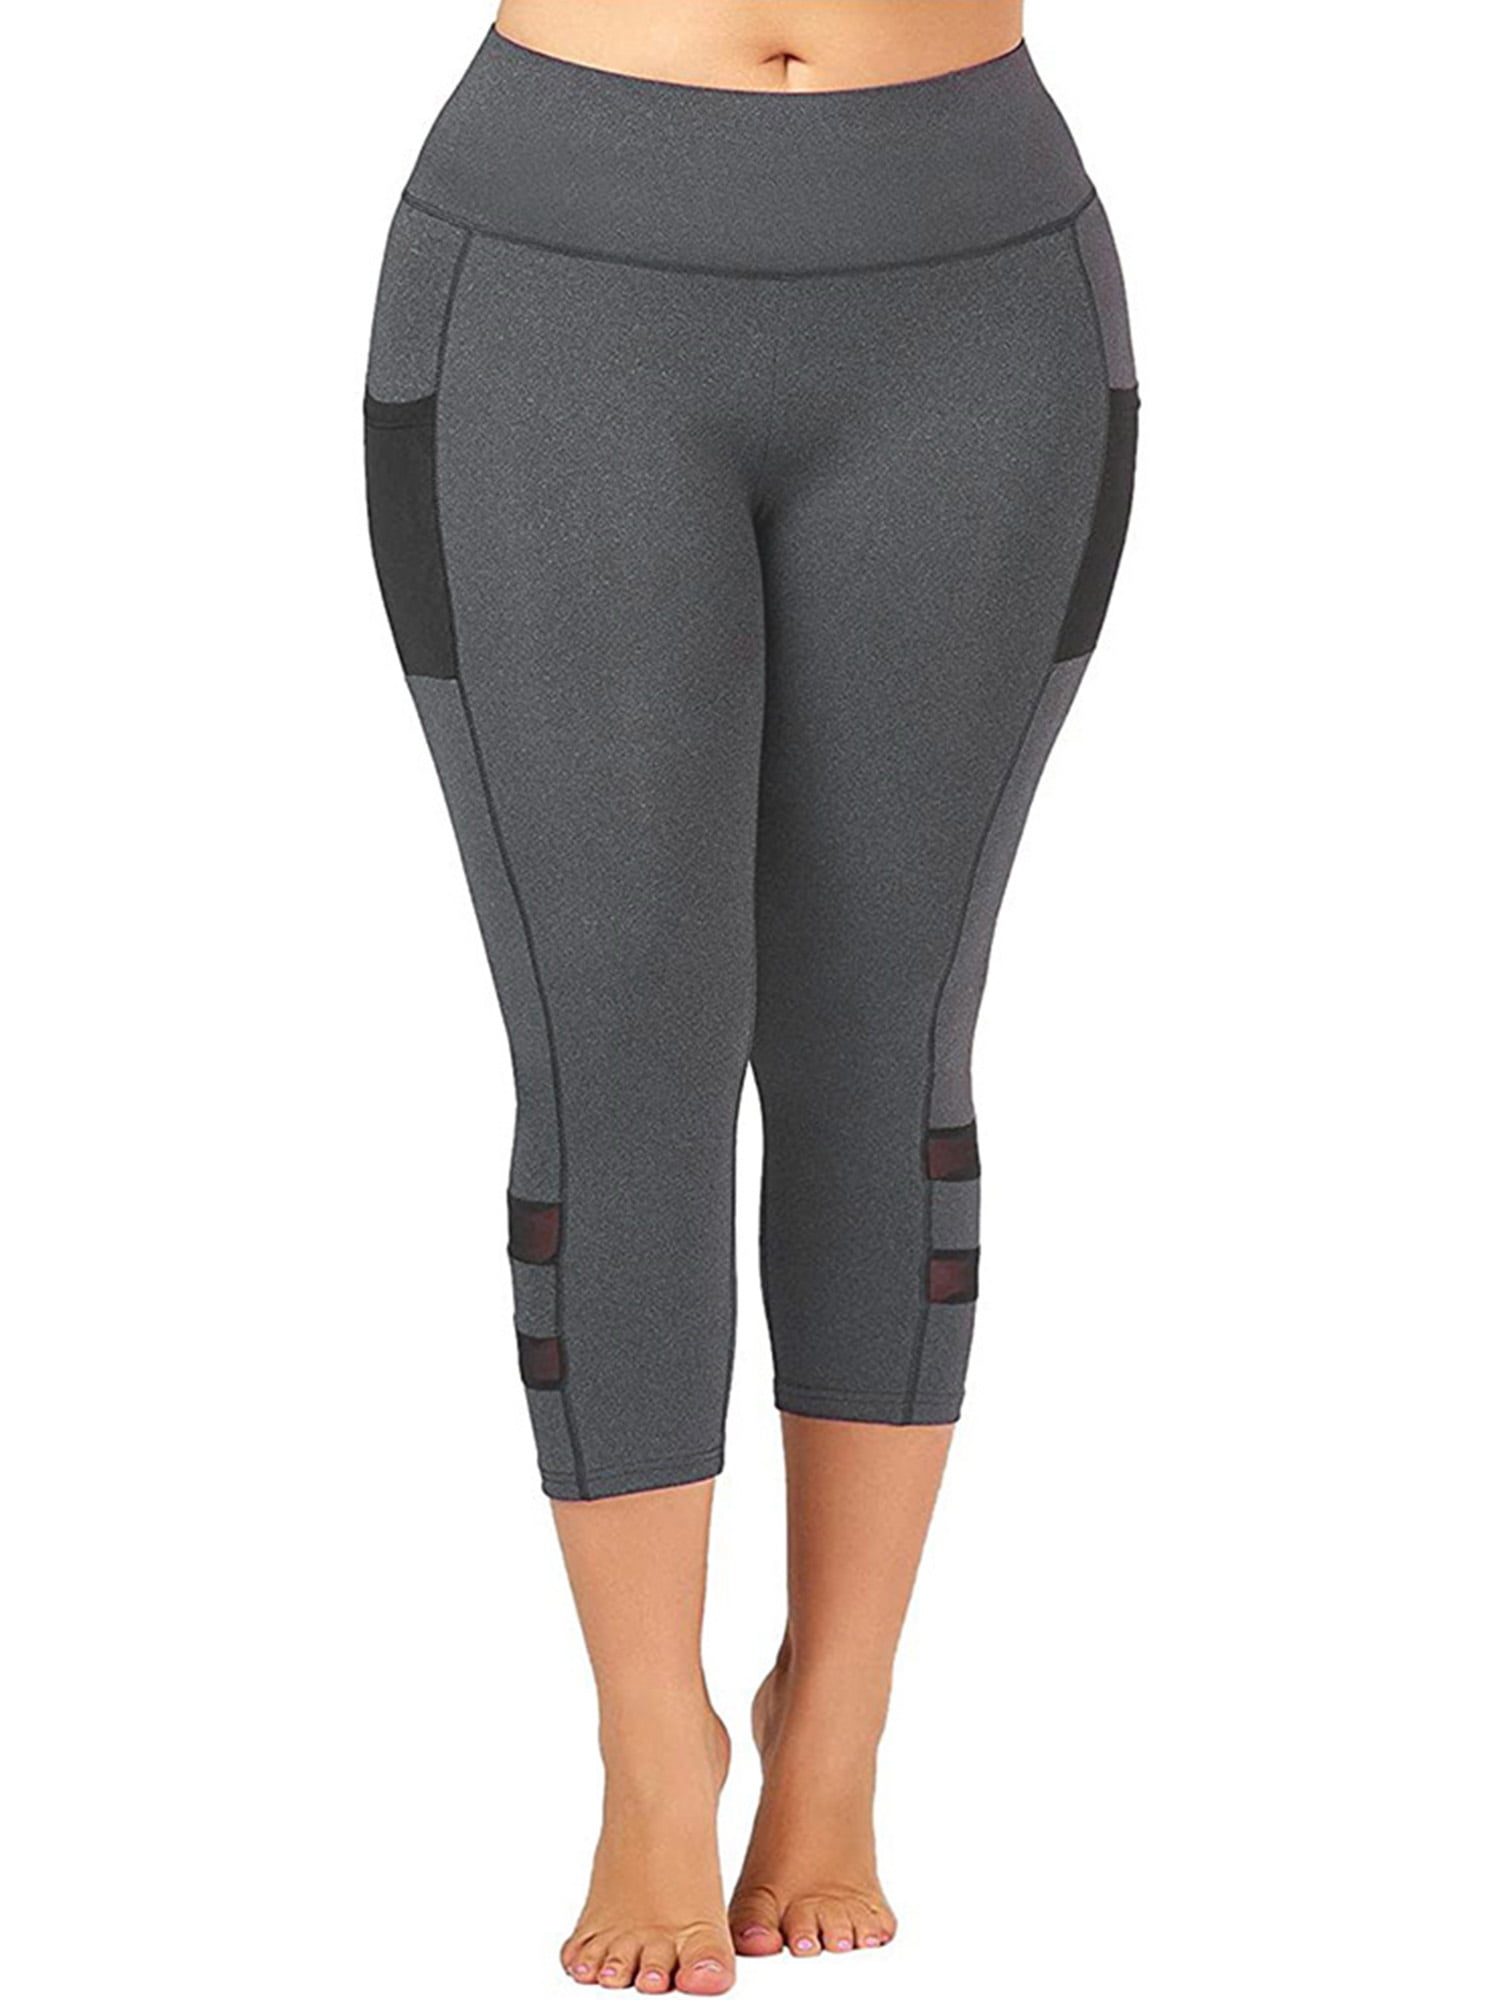 Vitmona Women's Yoga Pants Plus Size Solid Color Skinny Cropped ...